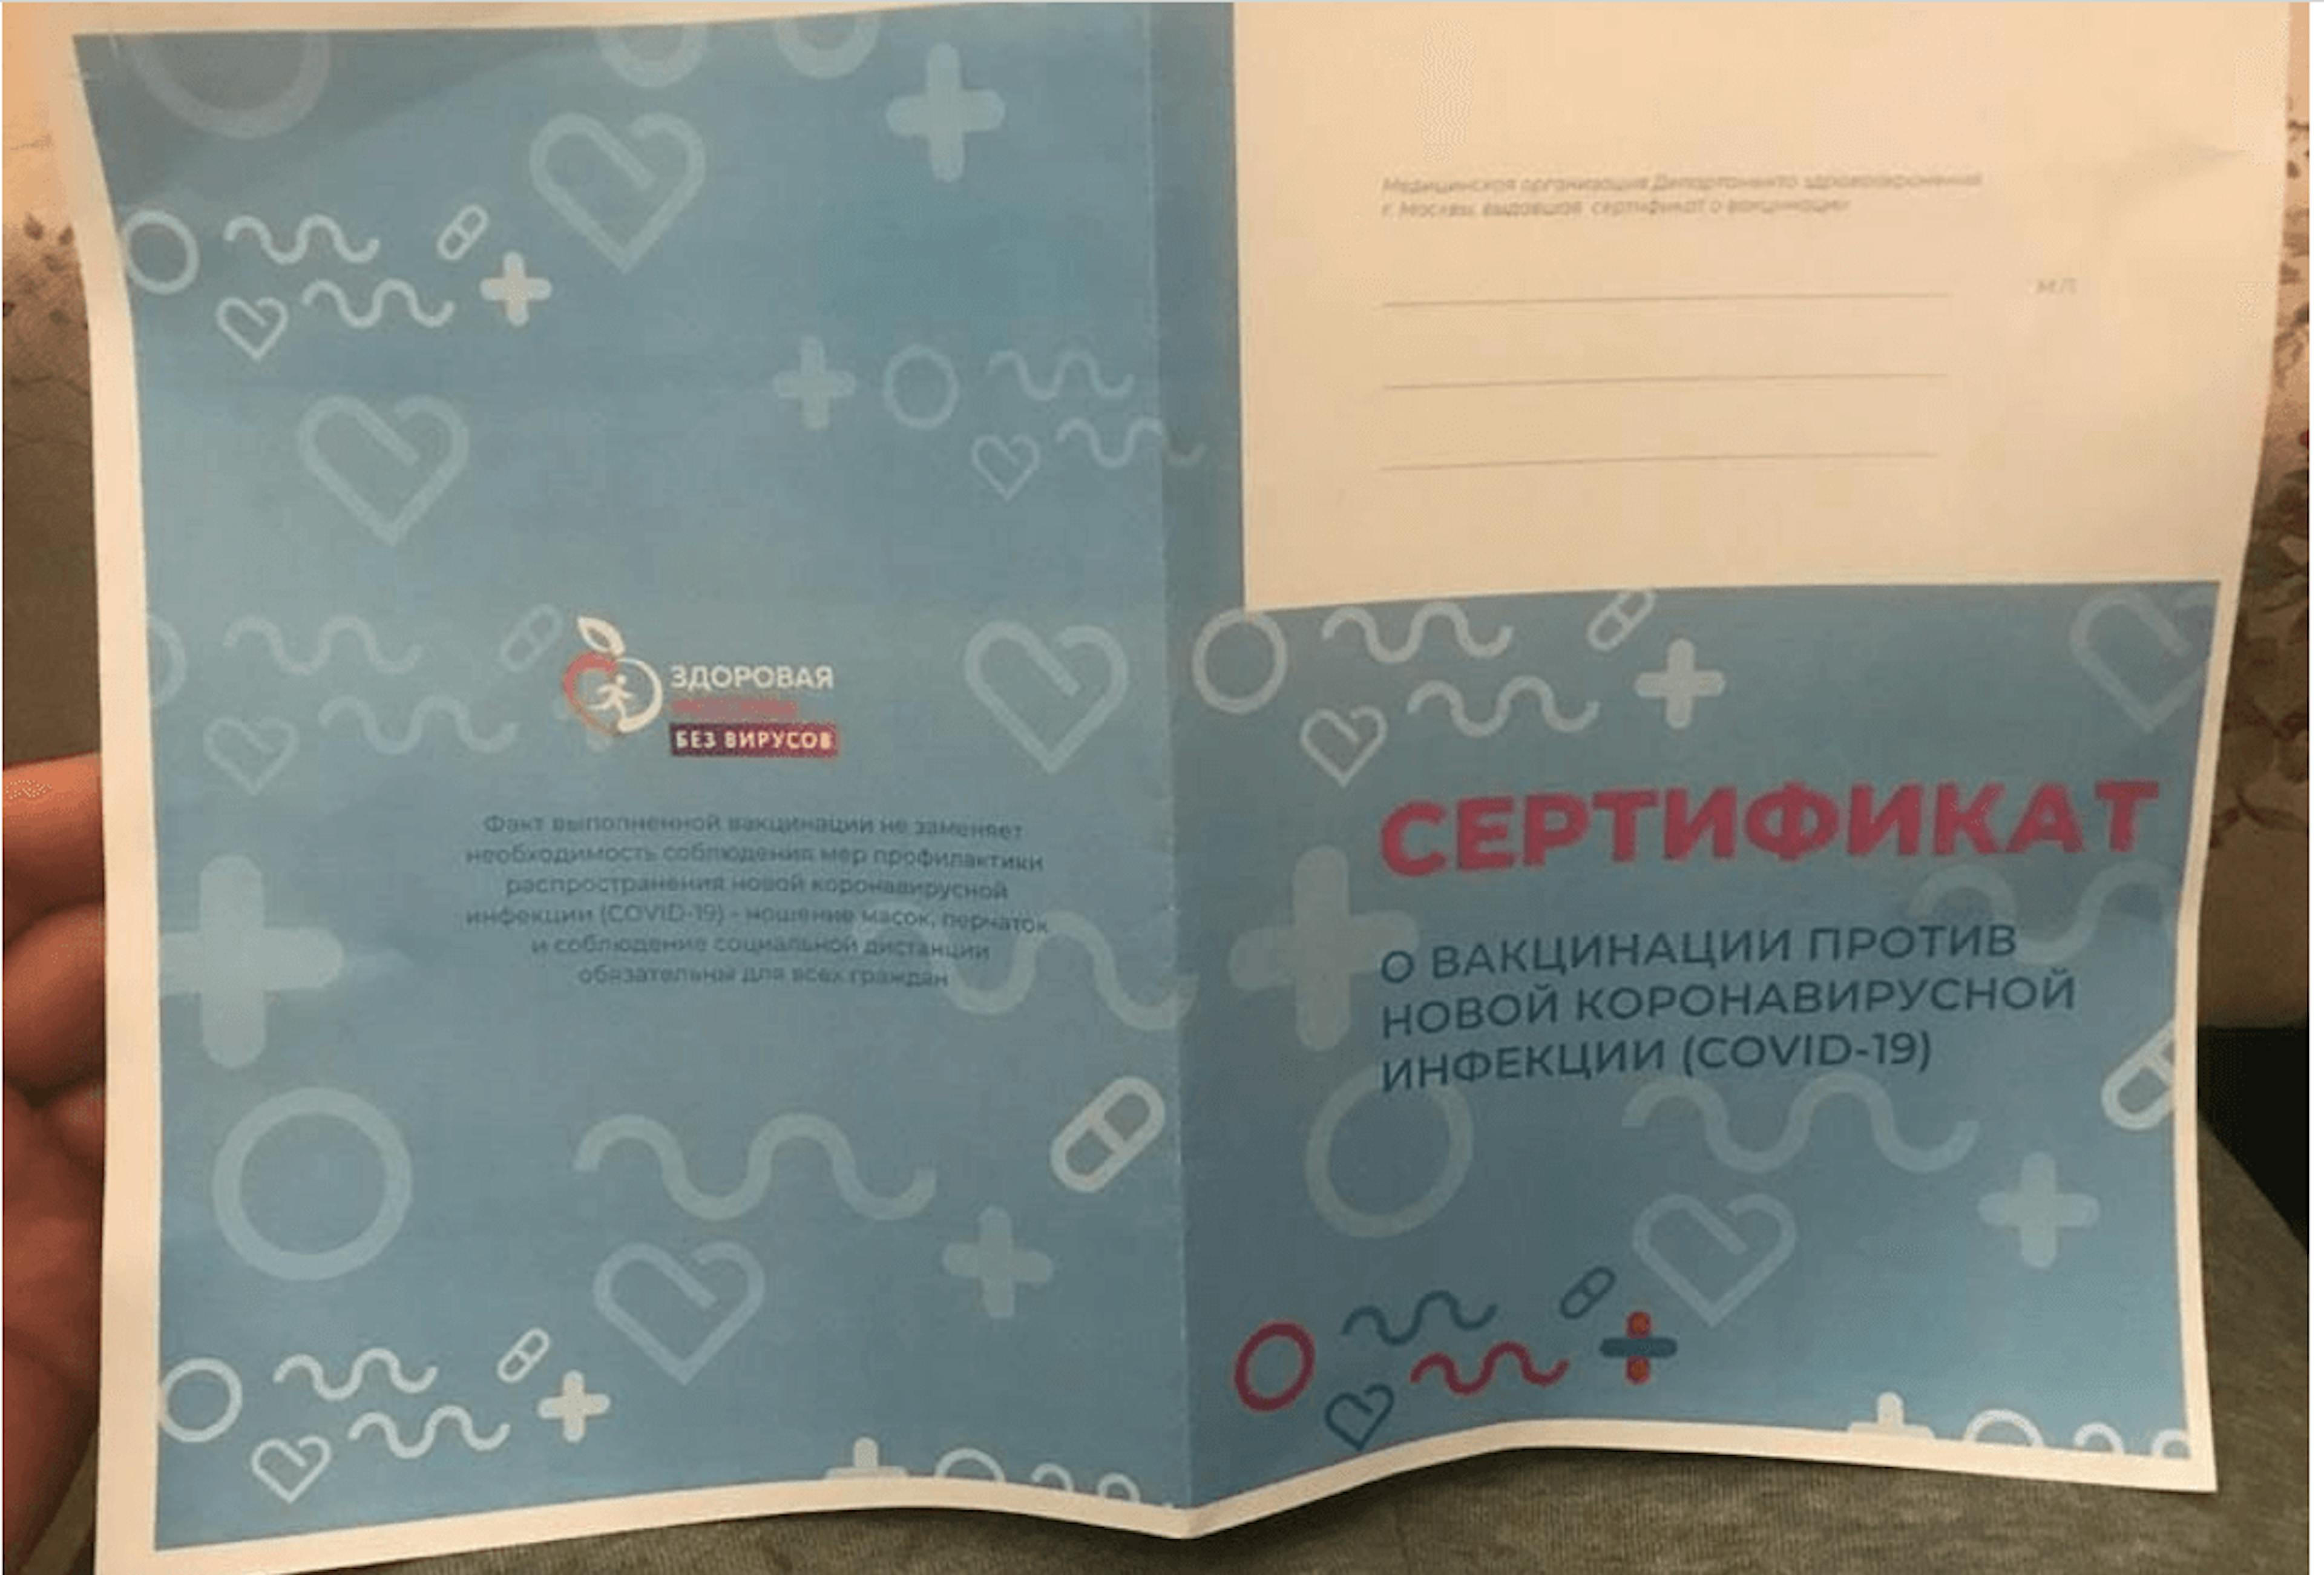 A fake Russian vaccination certificate